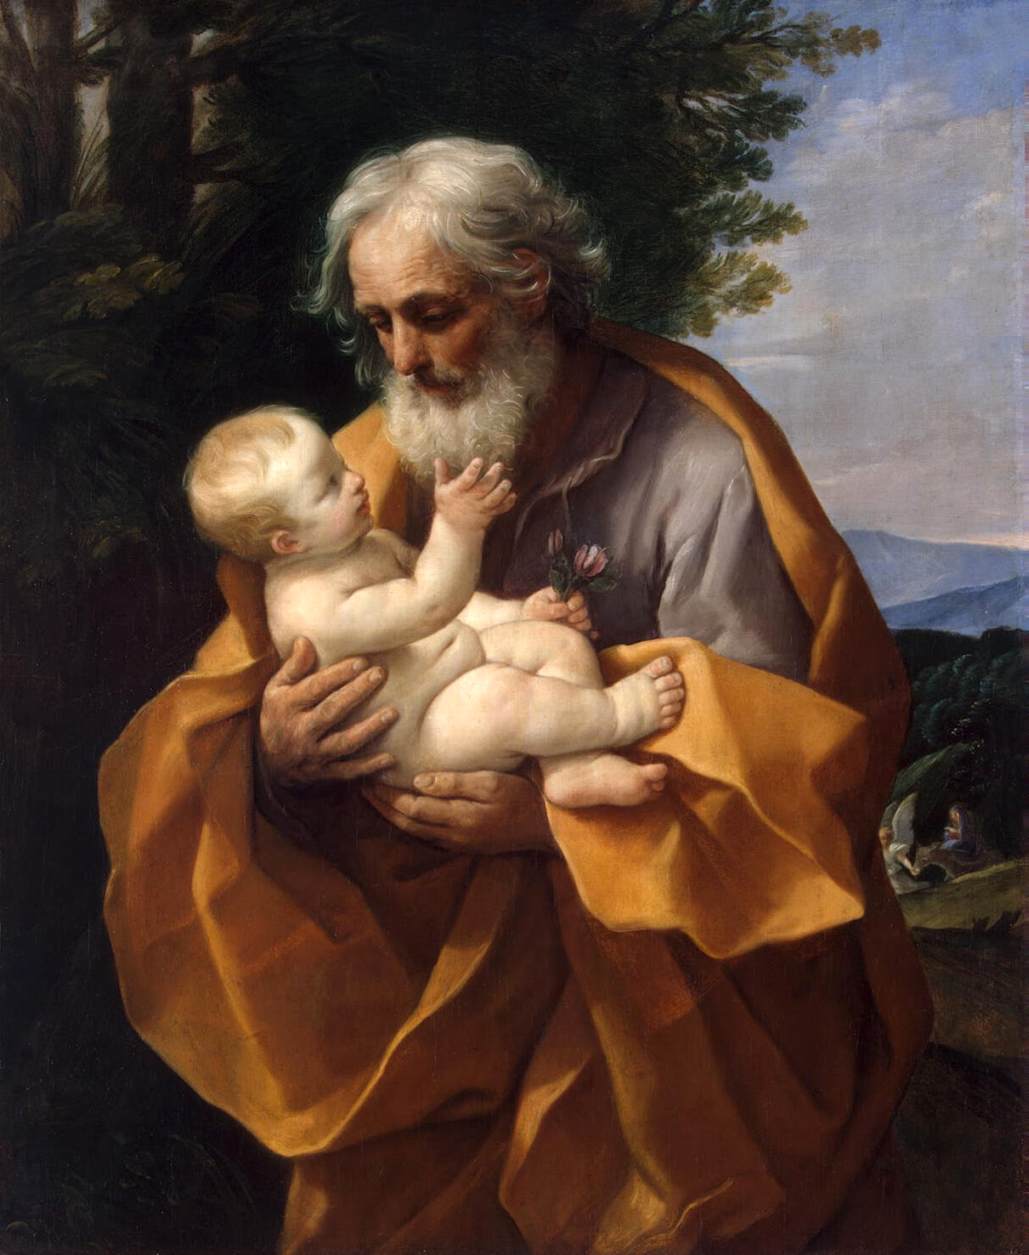 San José med babyen Jesus